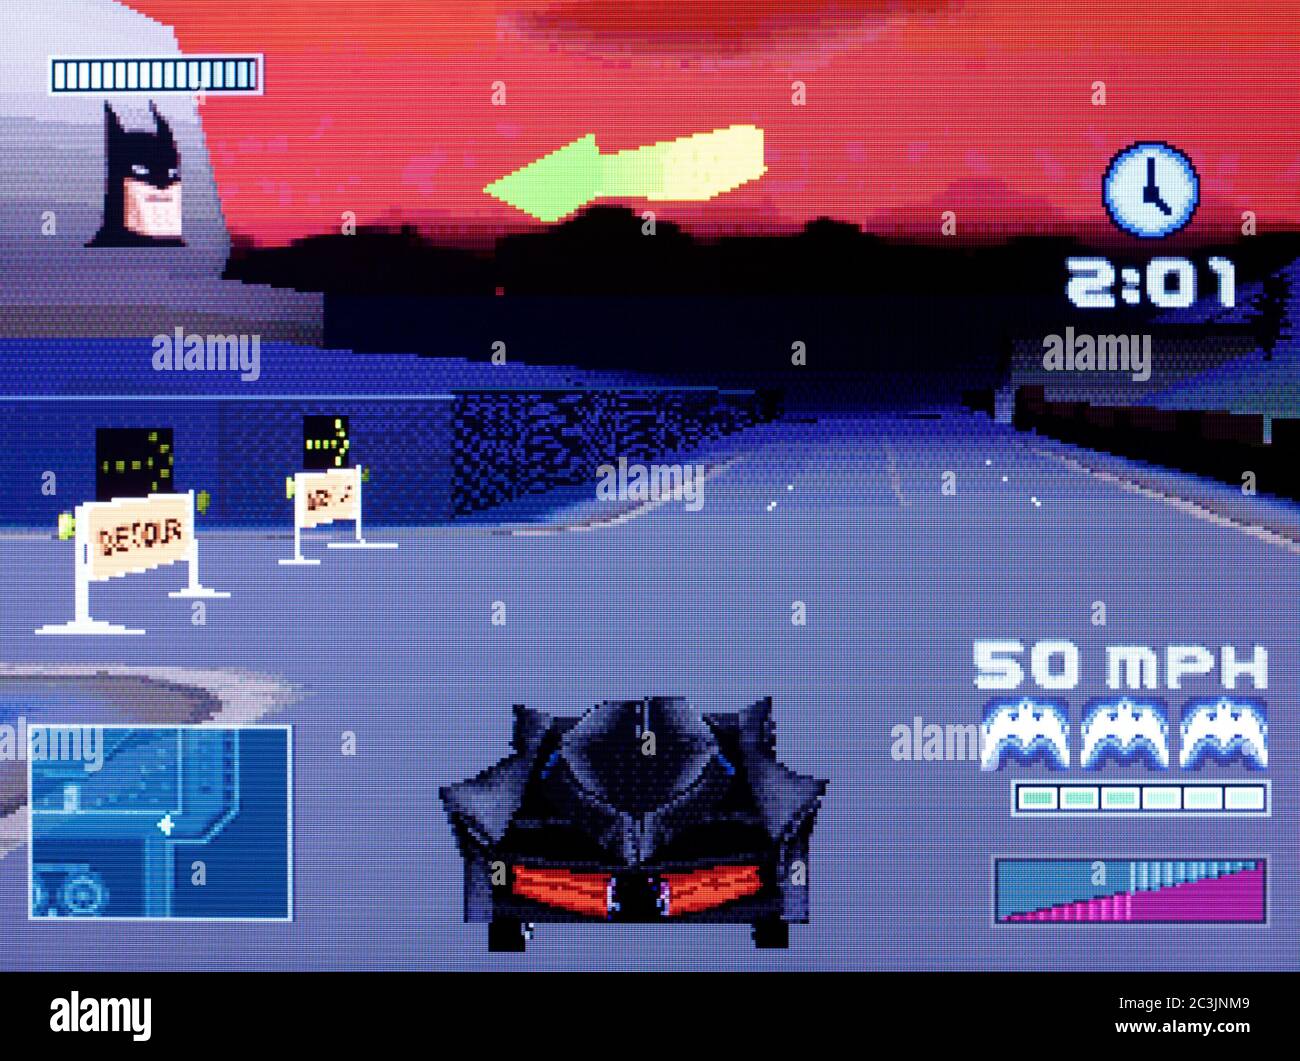 Batman Gotham City Racer - Sony Playstation 1 PS1 PSX - Editorial use only  Stock Photo - Alamy